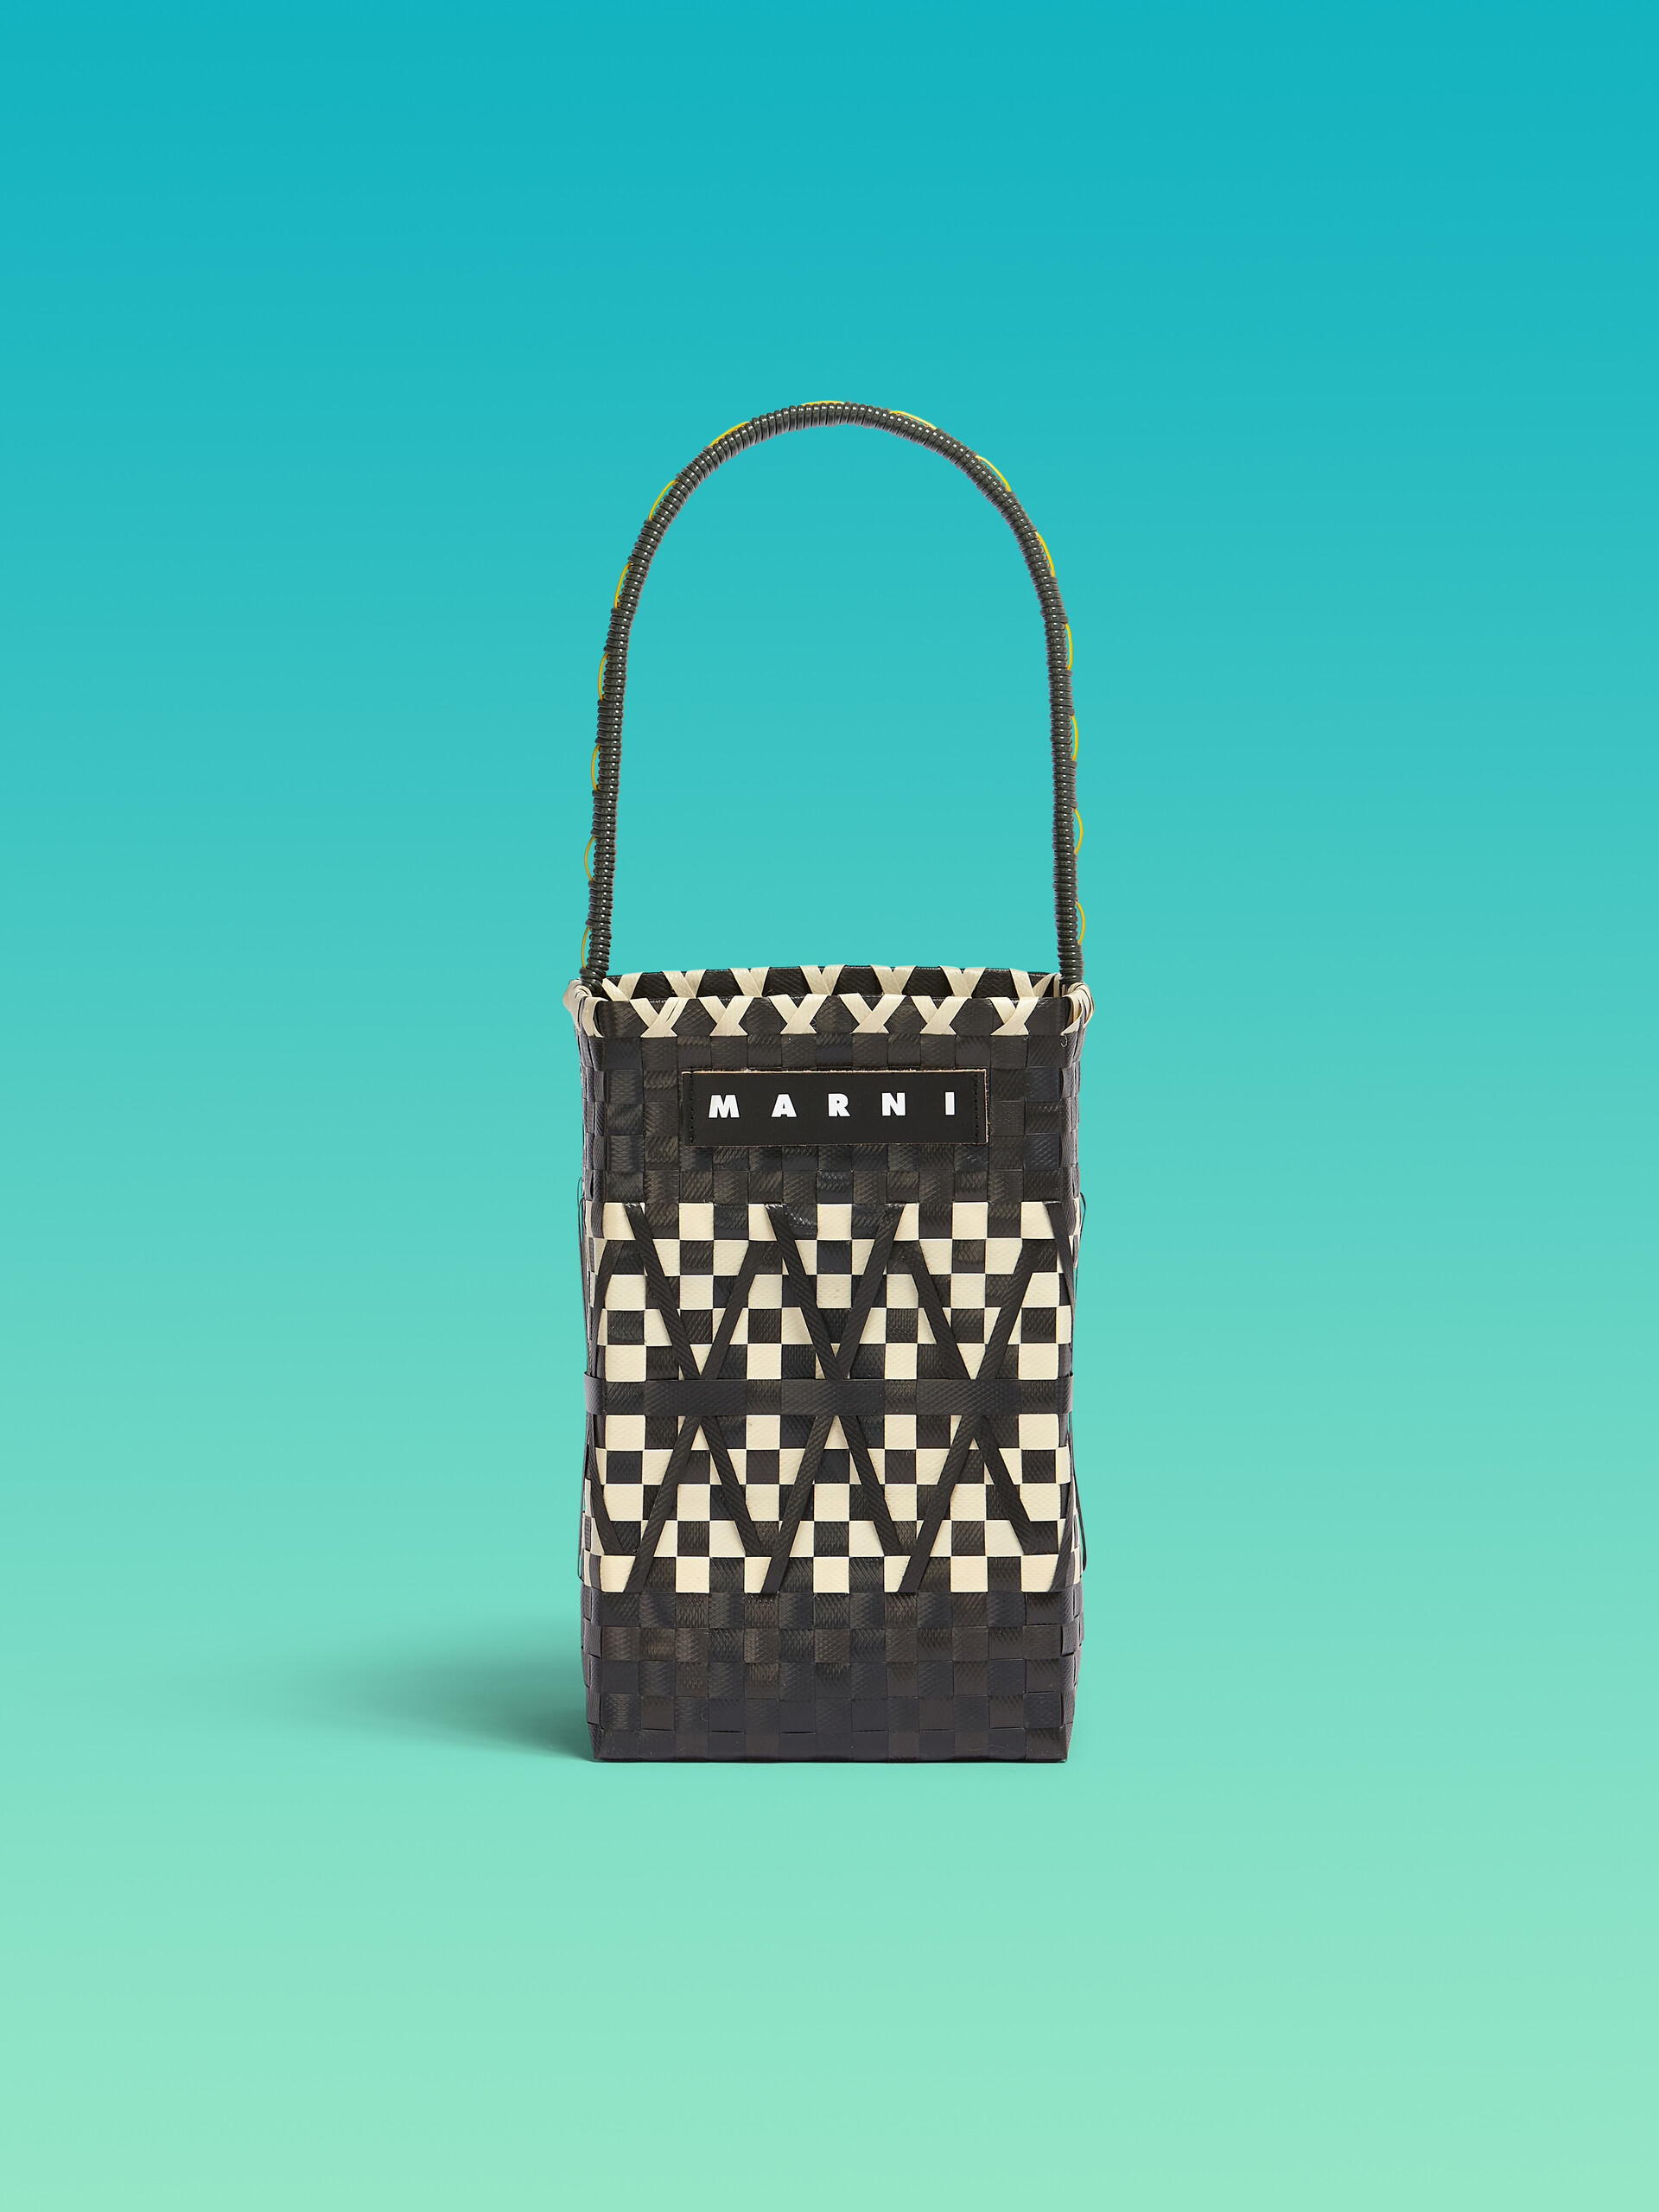 MARNI MARKET STENCIL black and white bucket bag - Shopping Bags - Image 1